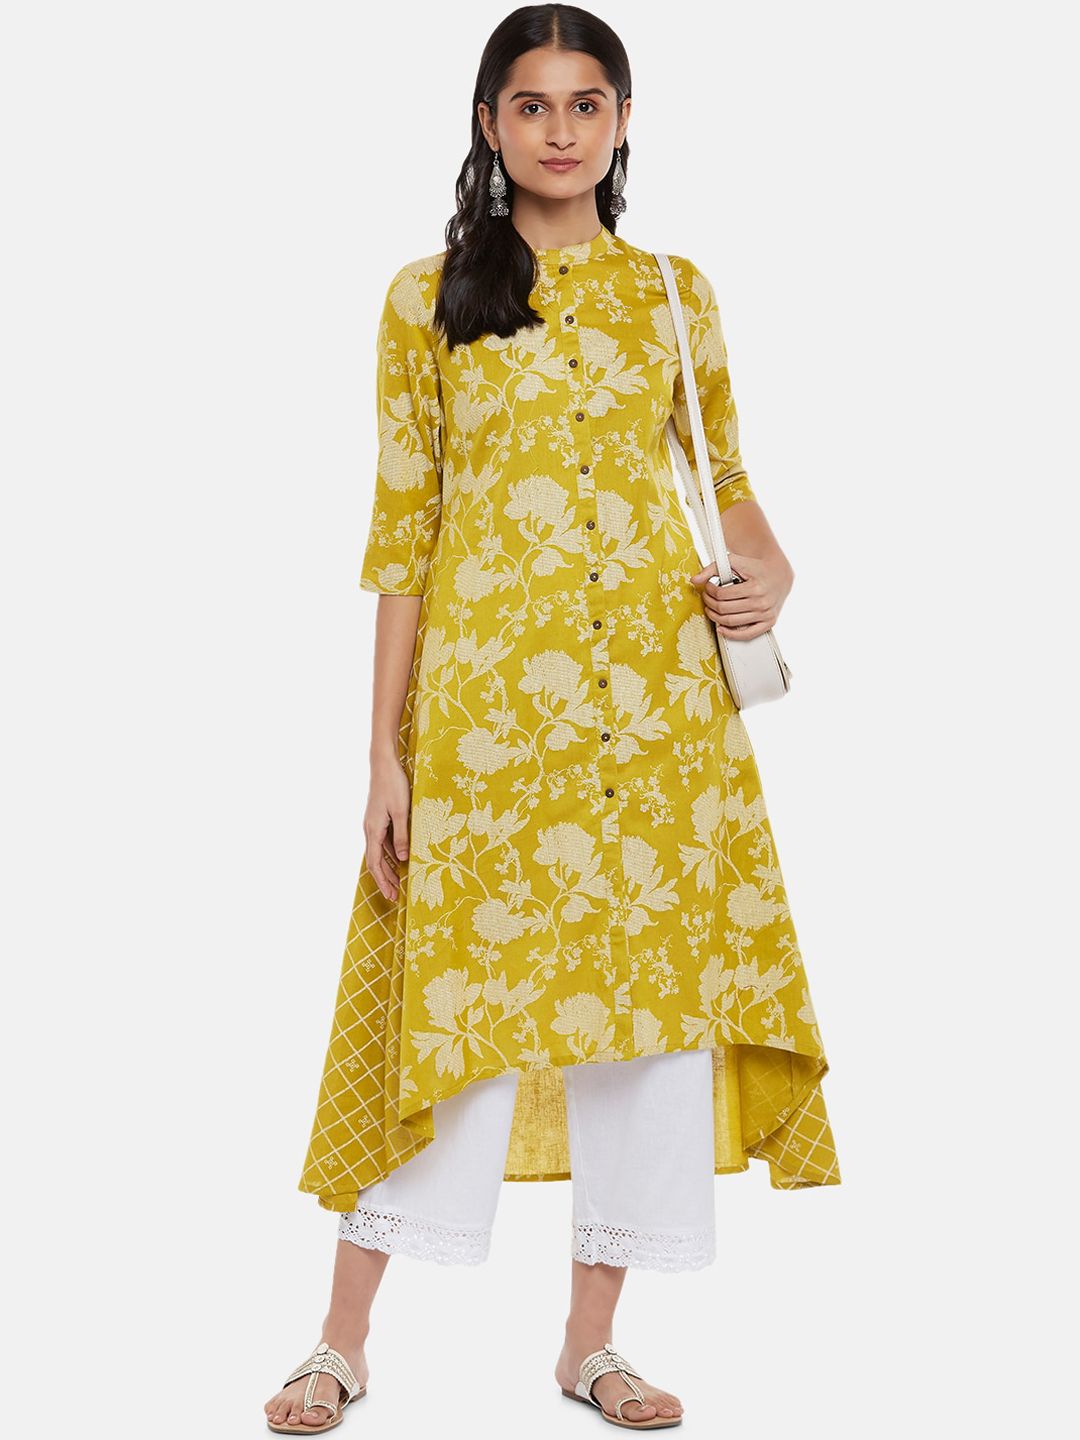 RANGMANCH BY PANTALOONS Women Yellow Floral Printed Flared Sleeves Anarkali Kurta Price in India